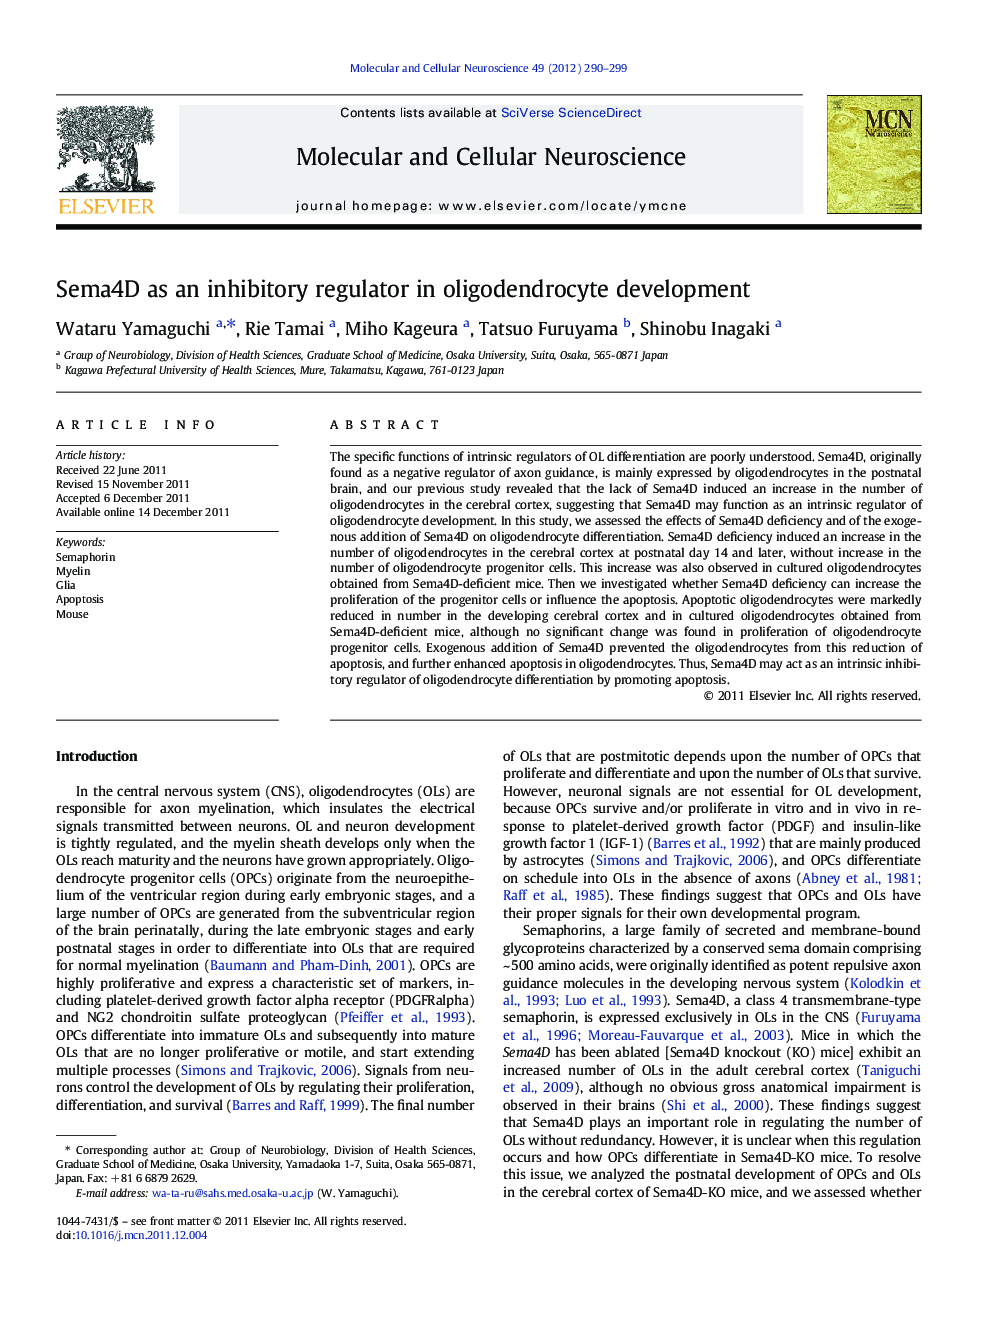 Sema4D as an inhibitory regulator in oligodendrocyte development